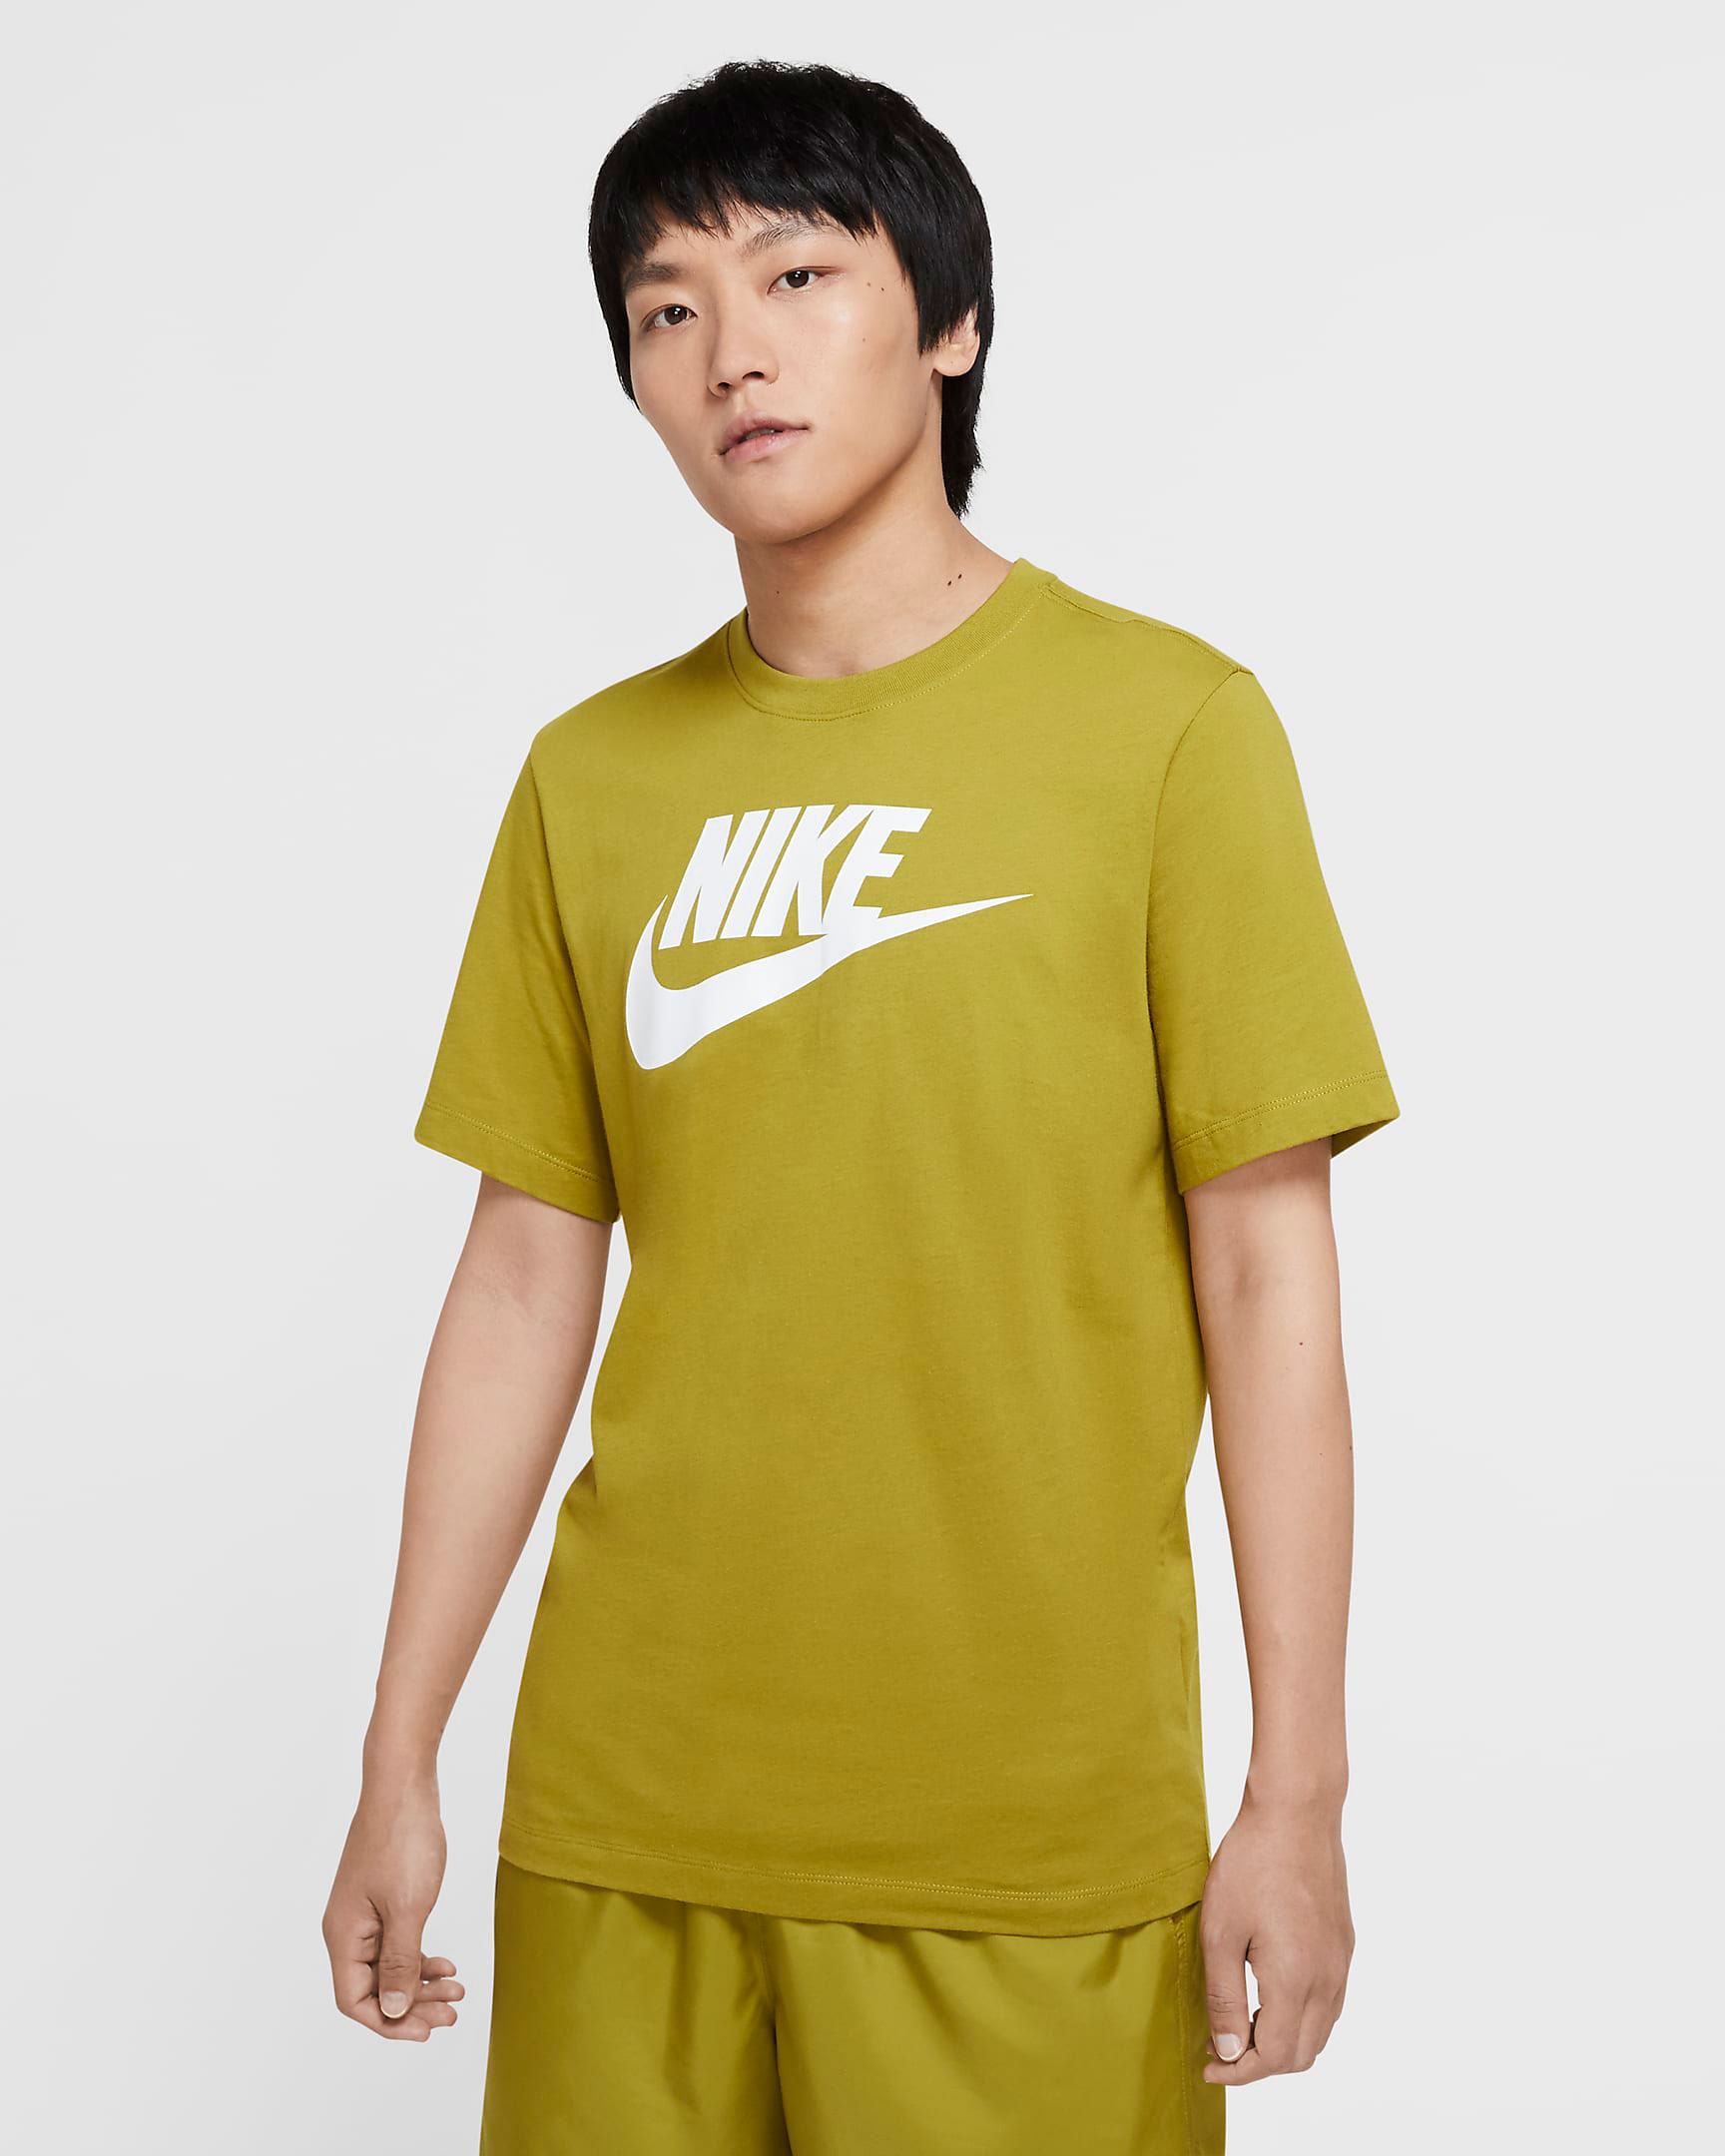 Nike Dunk Low Veneer 2020 Shirts Clothing | SneakerFits.com